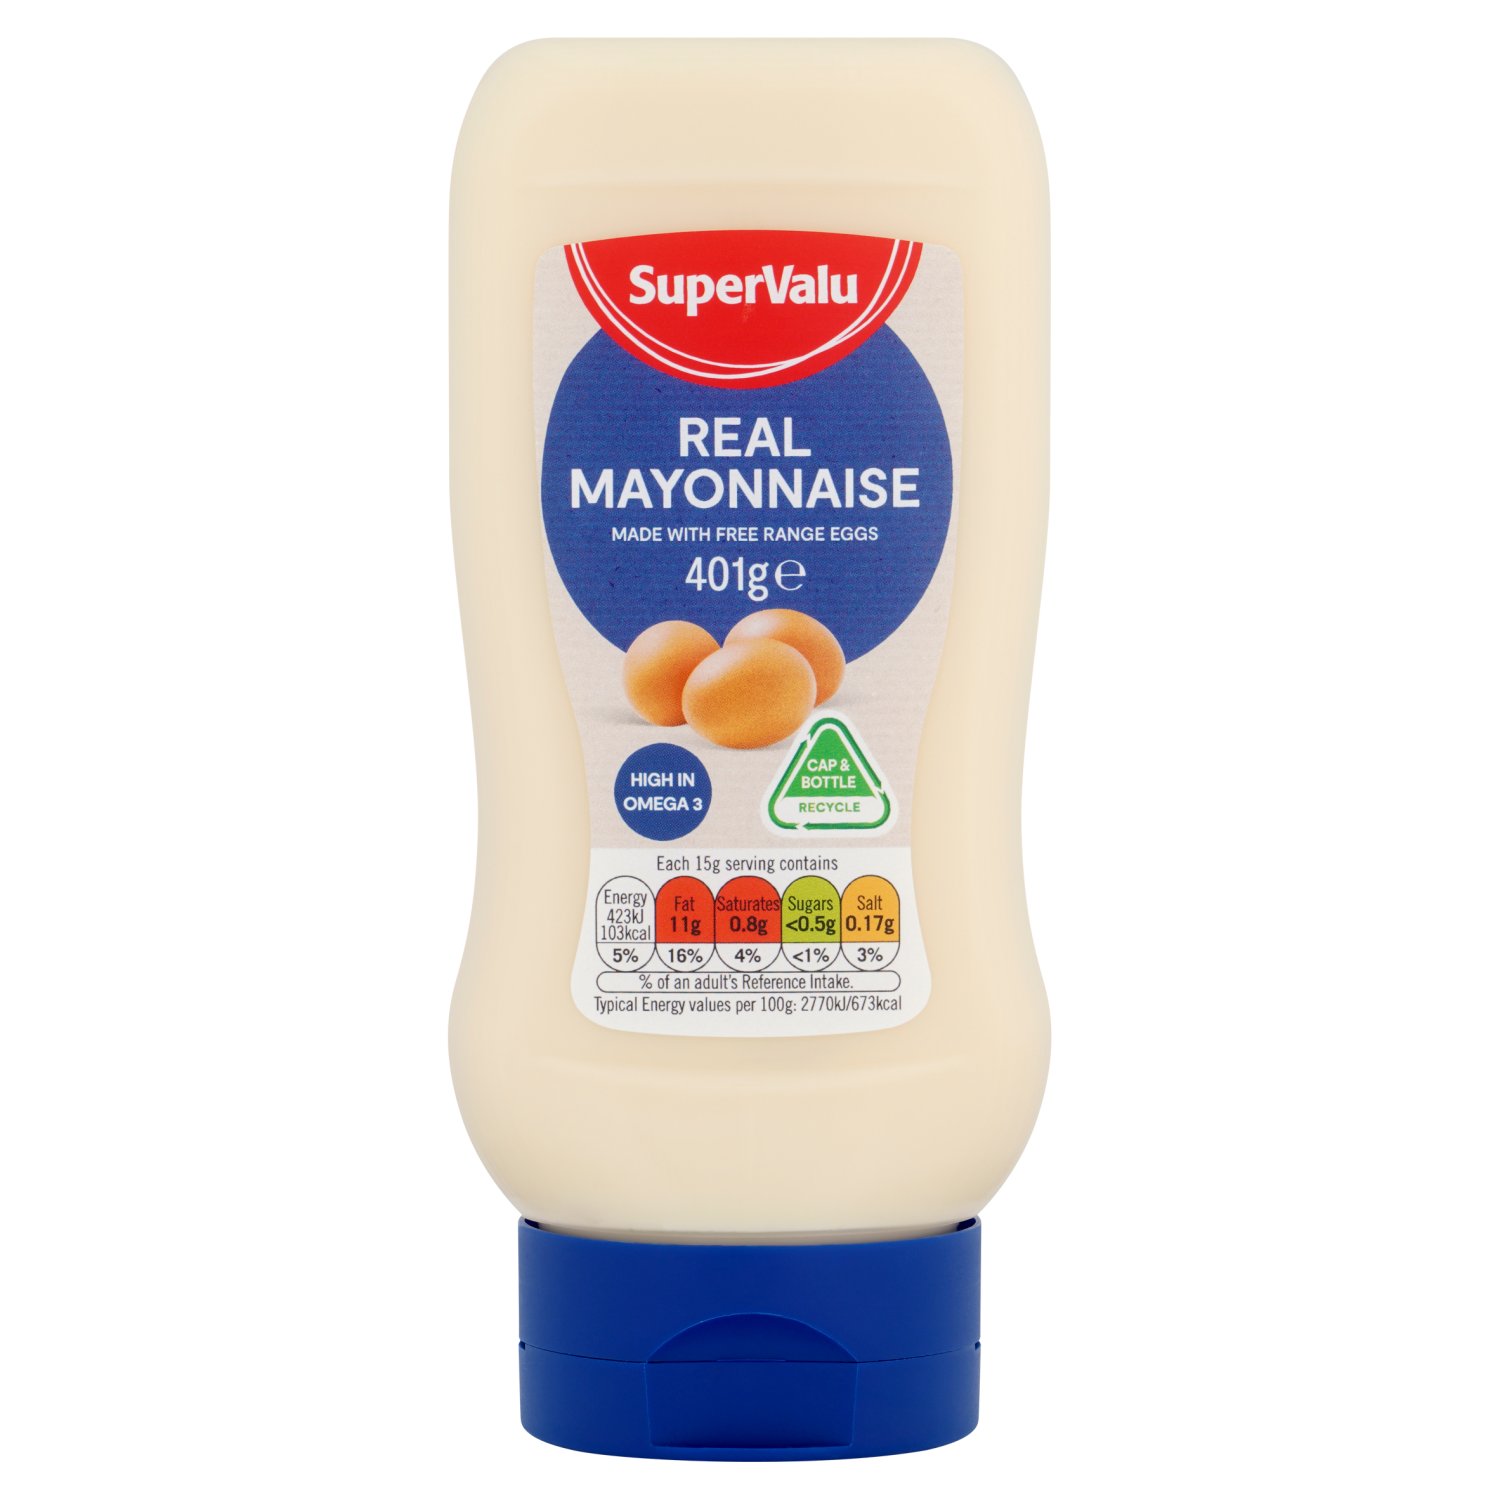 SuperValu Real Mayonnaise (401 g)